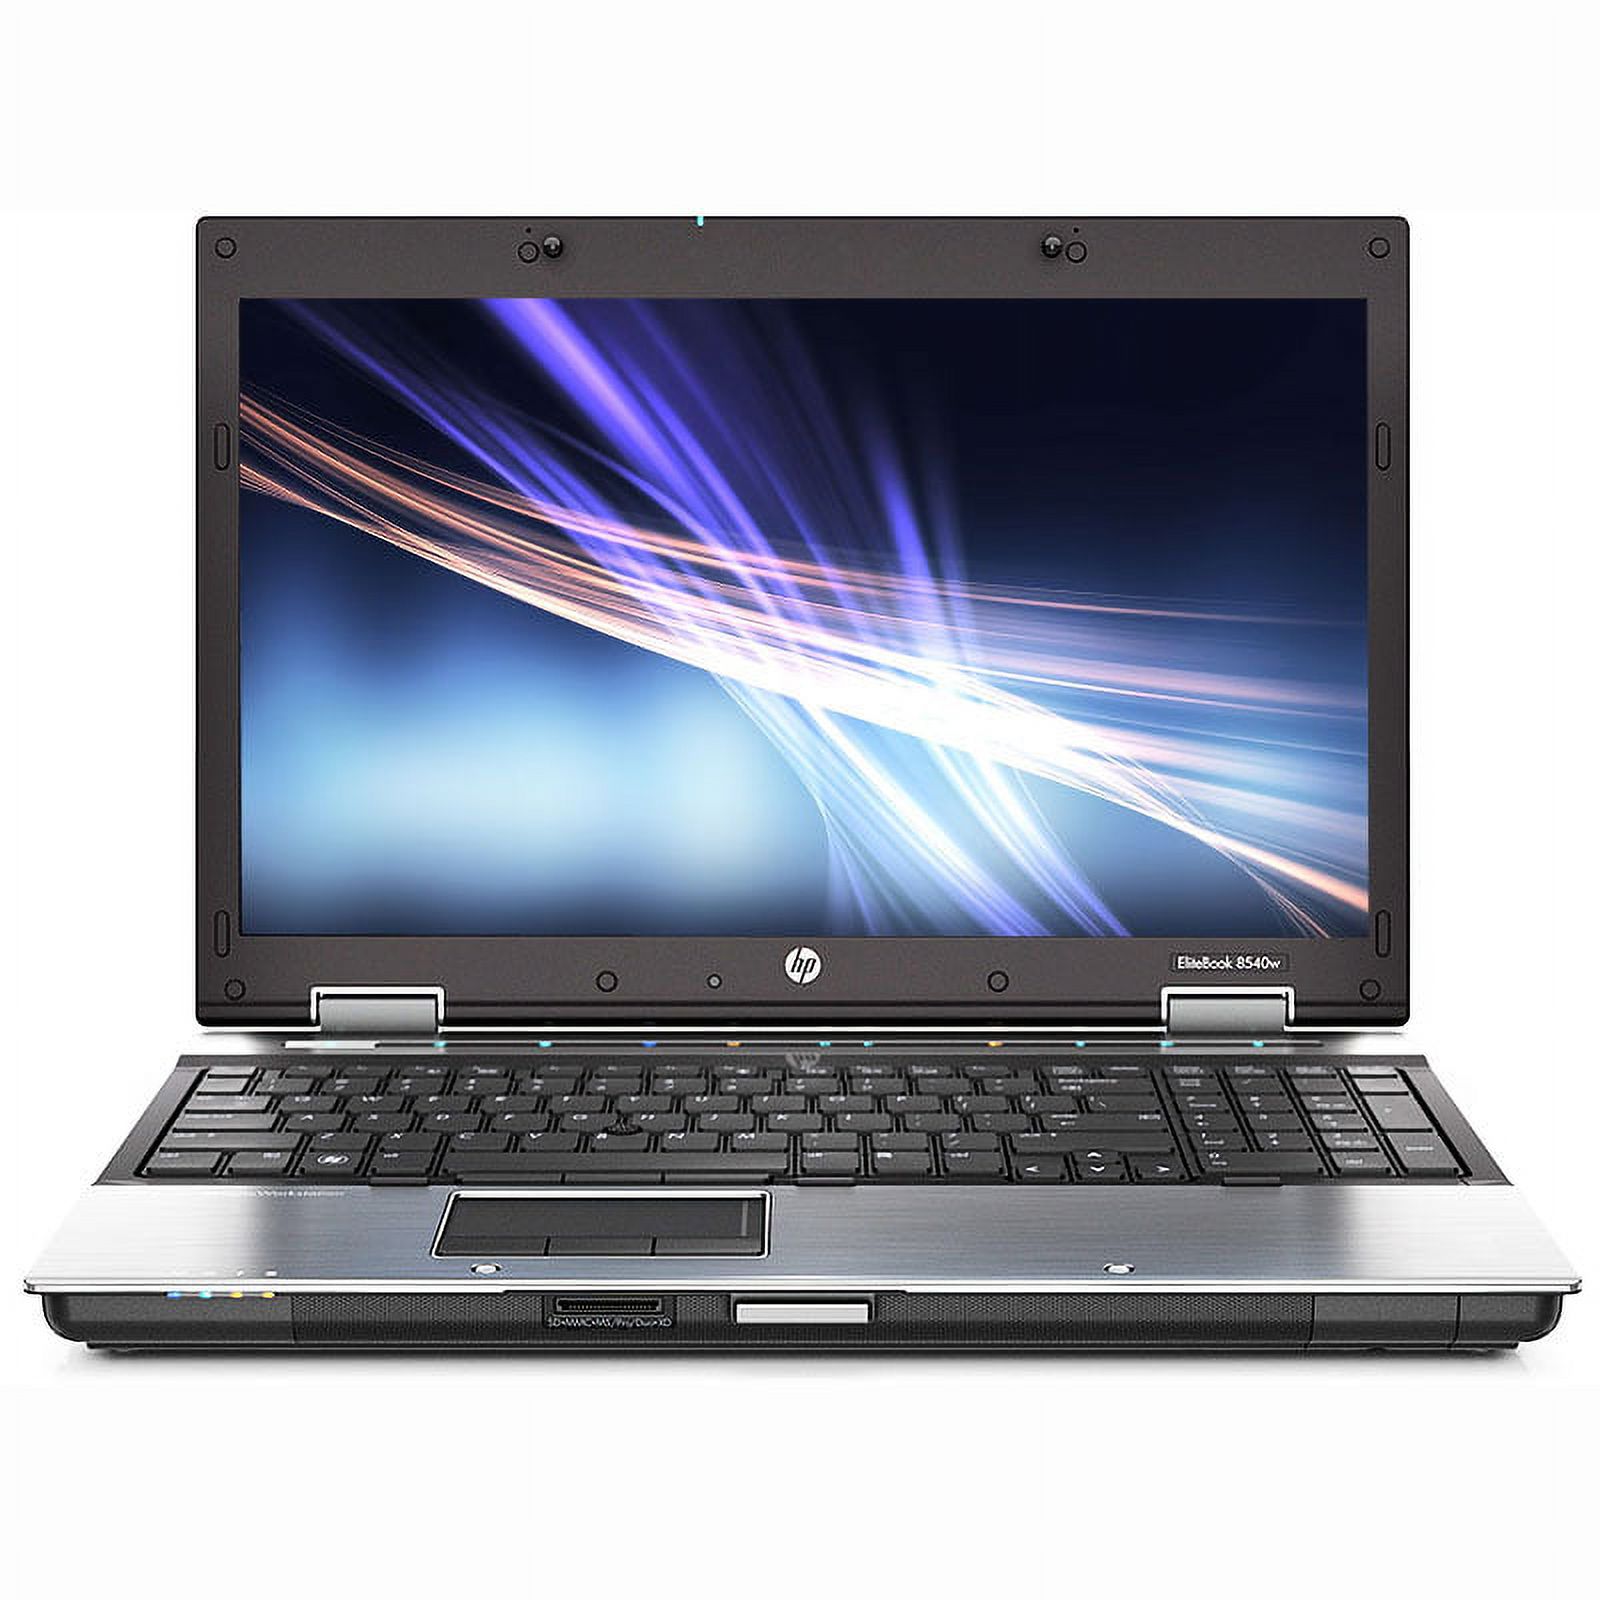 Used HP EliteBook 8540p 2.8GHz i7 4GB 320GB DVD Windows 10 Pro 64 Laptop B Camera - image 1 of 4